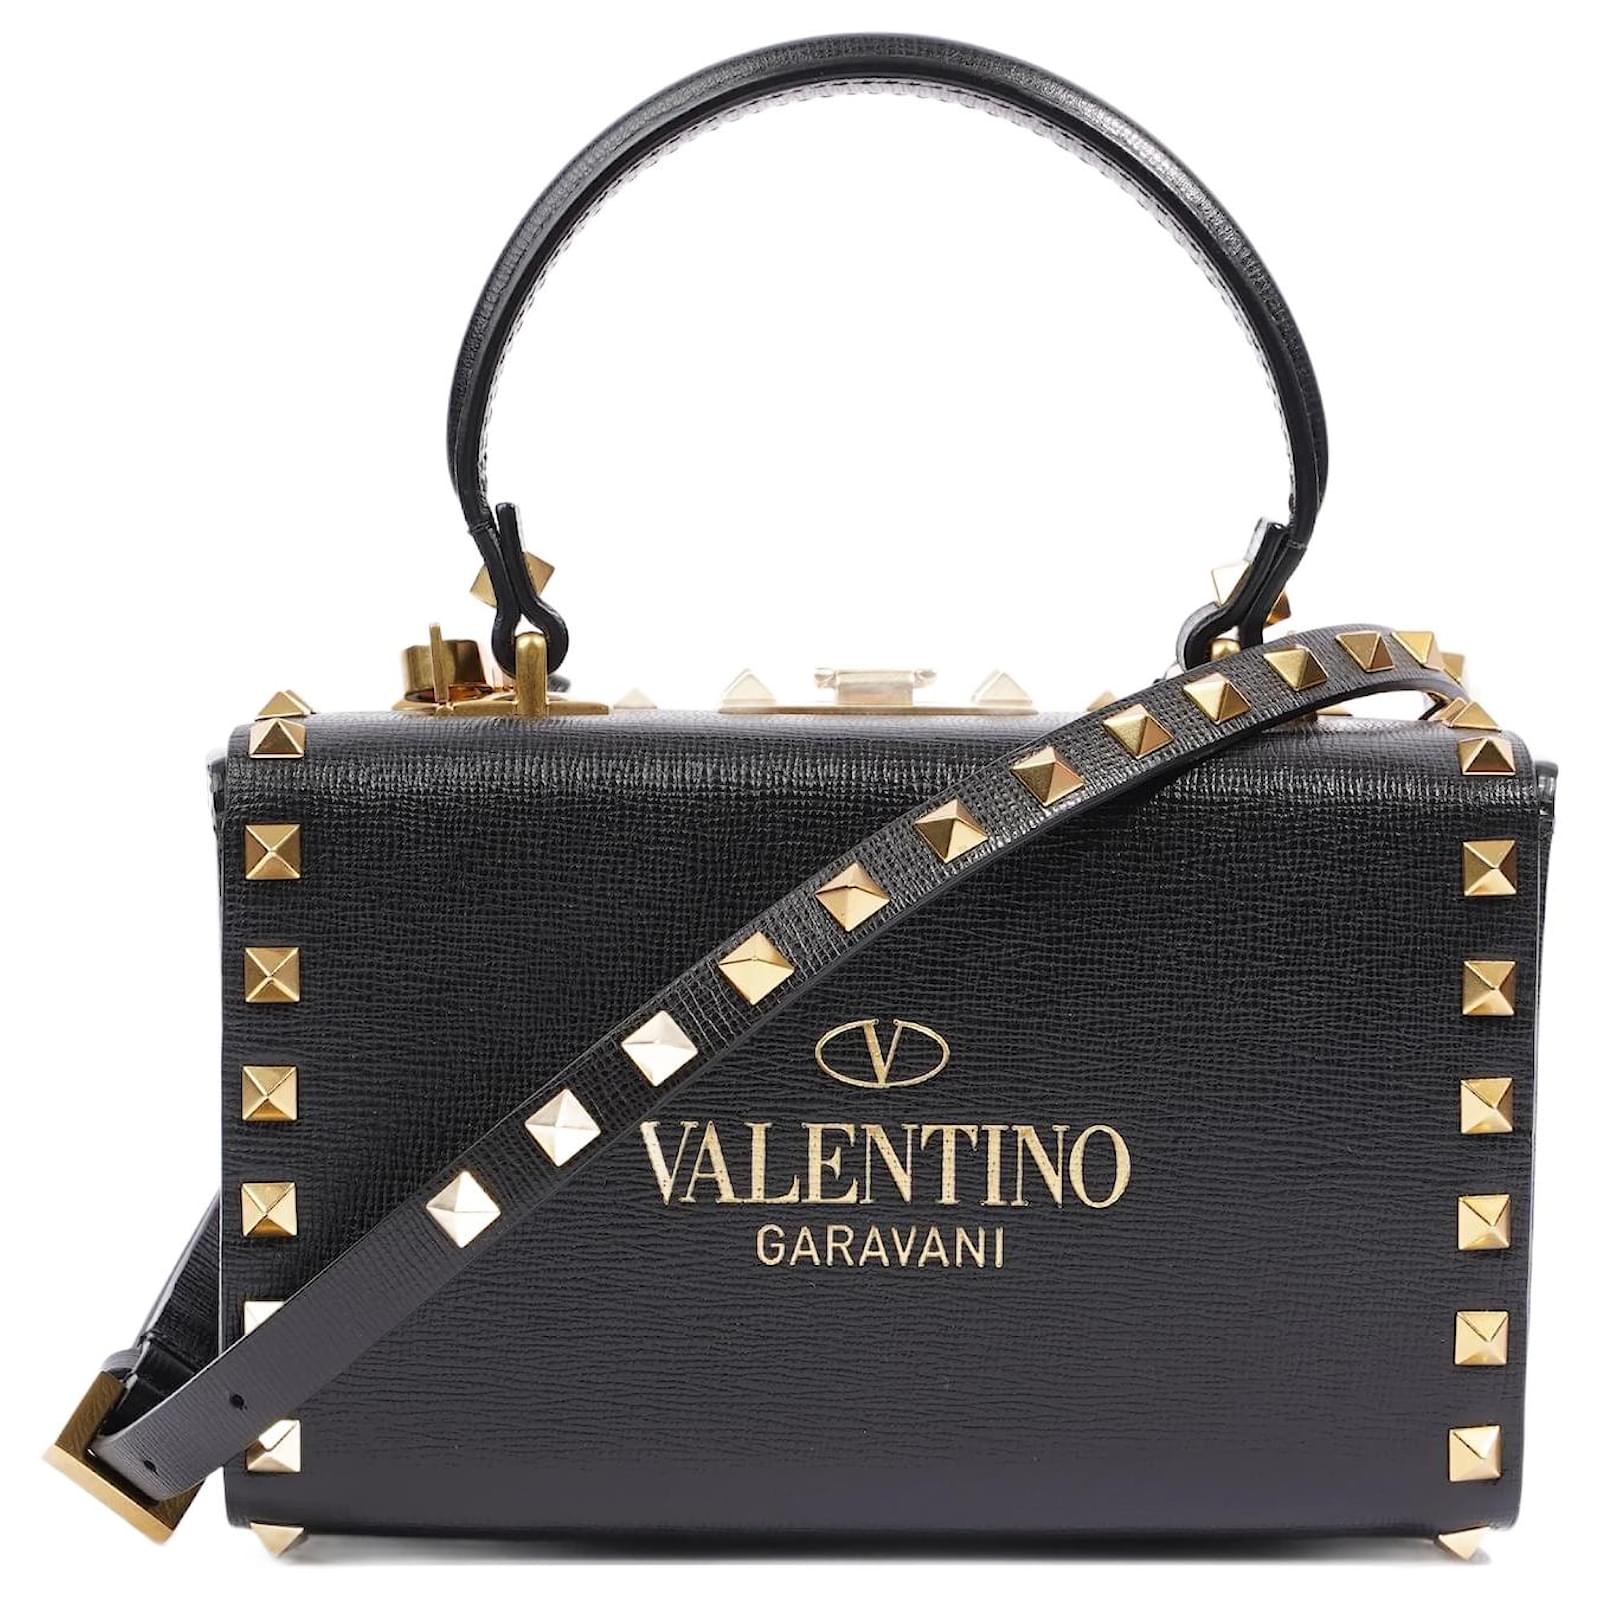 Valentino Garavani Alcove Box Bag